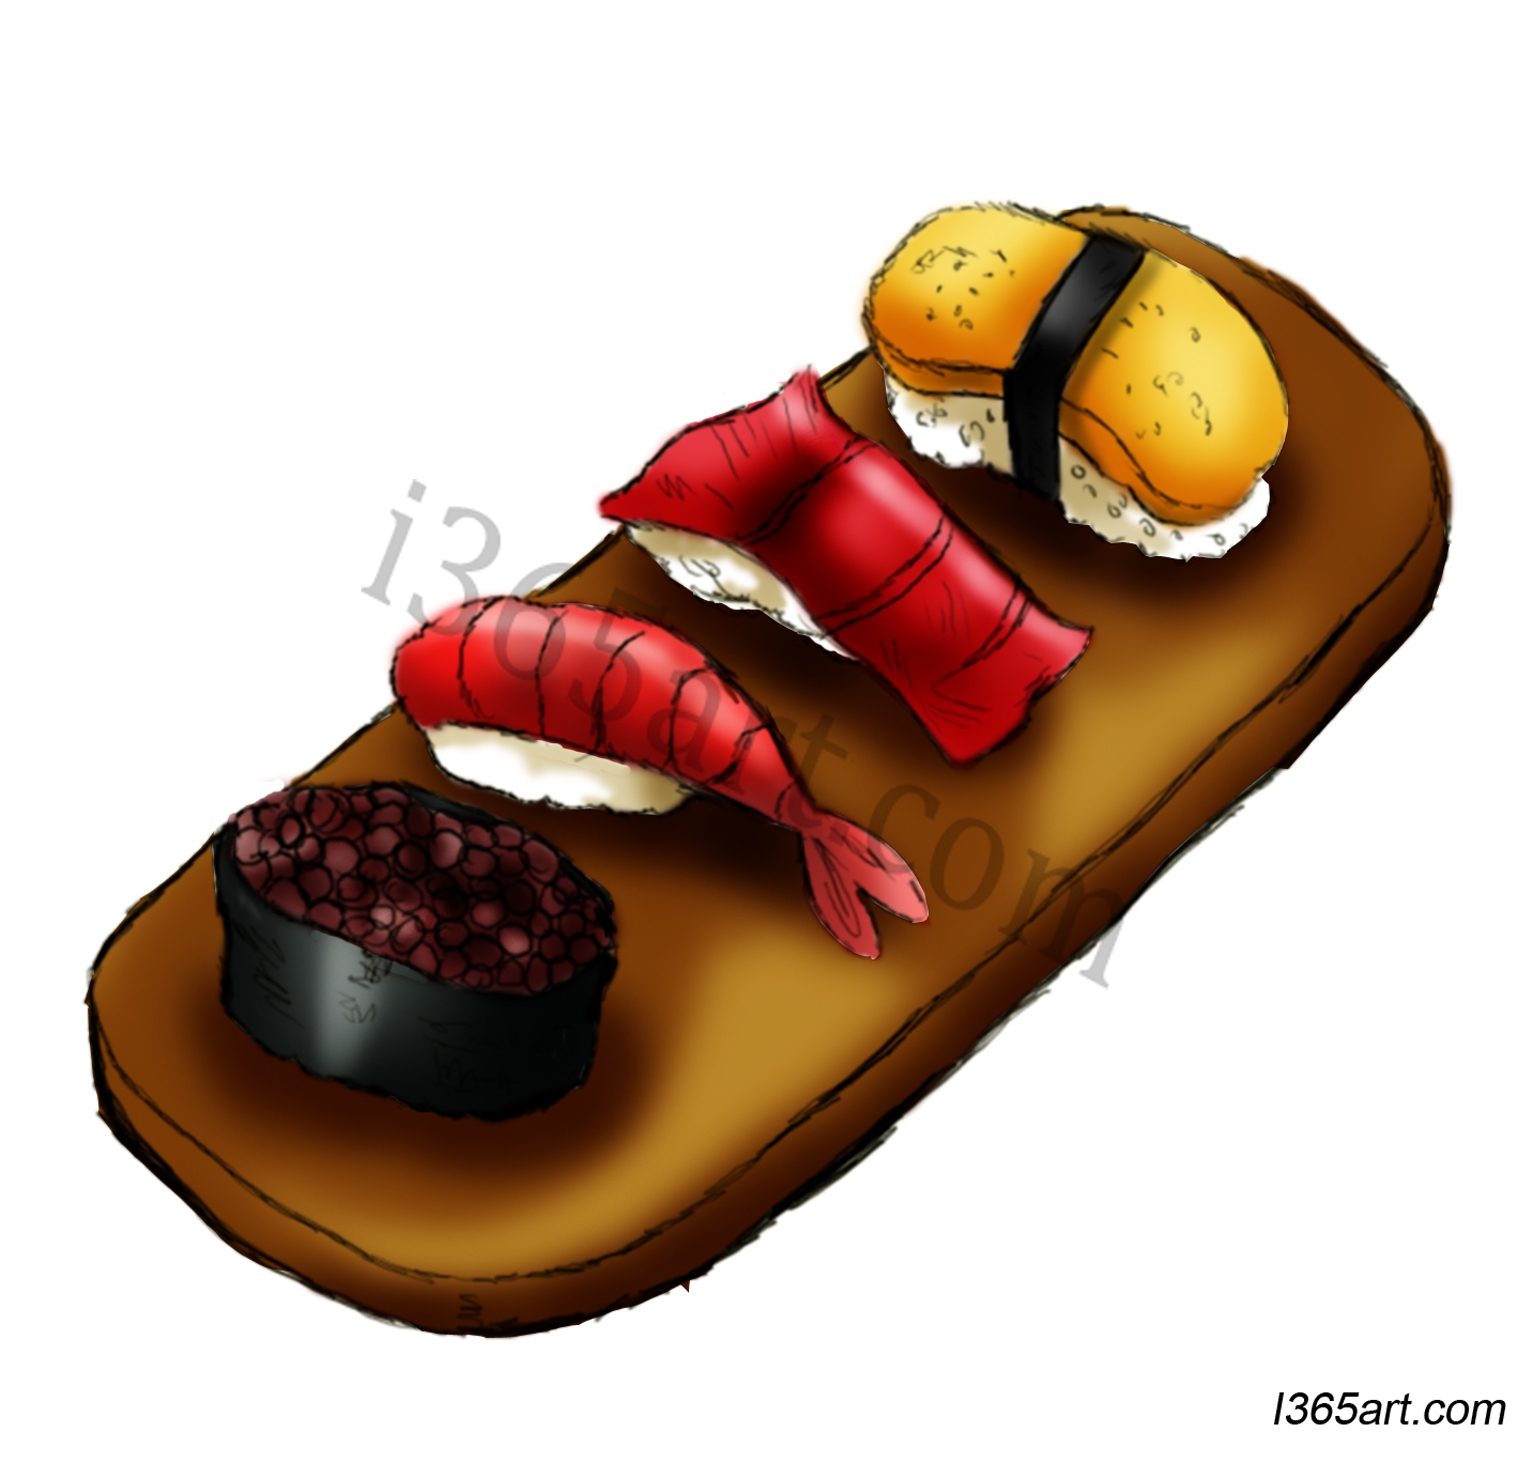 sushi illustration